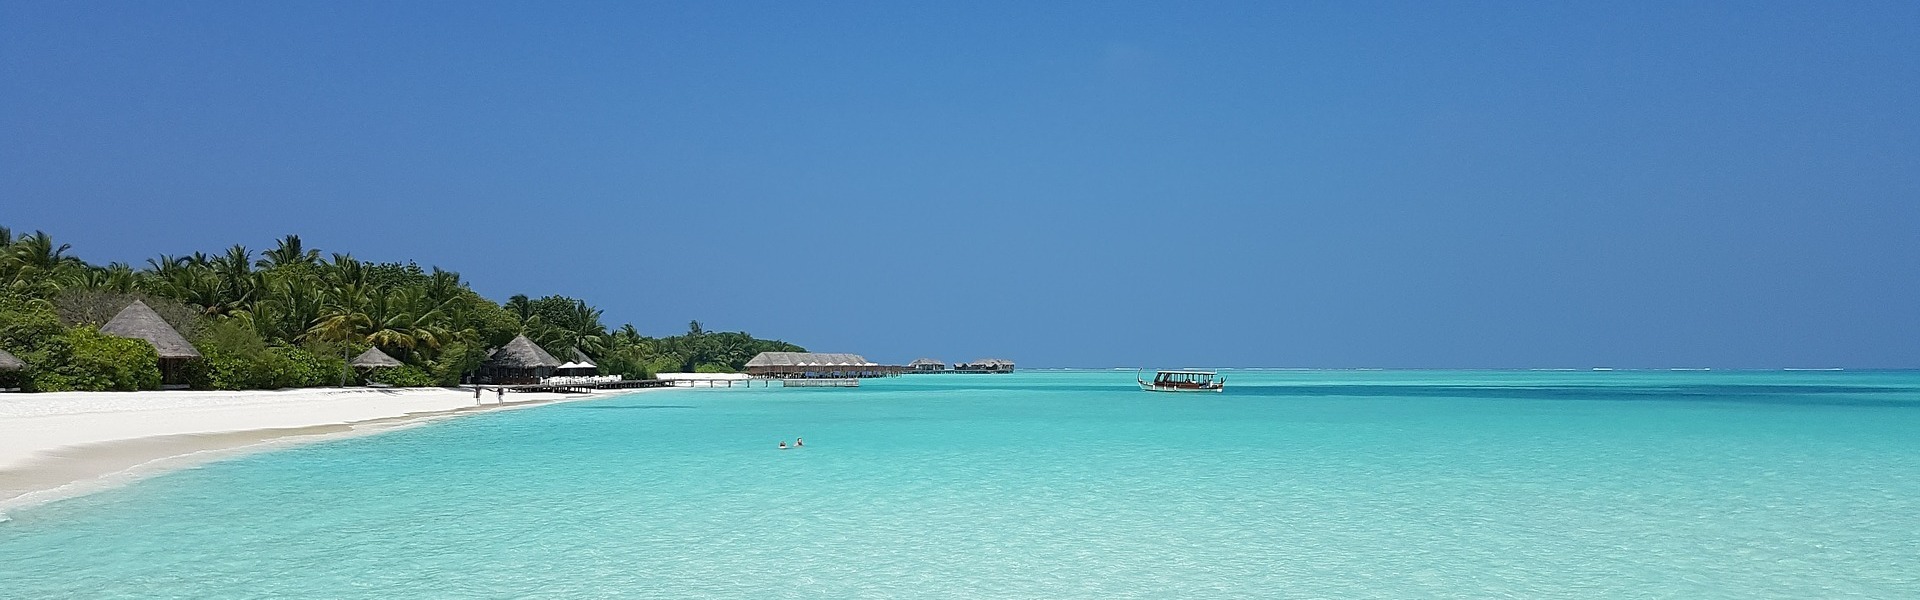 Maldives Honeymoons - Tailored Journeys